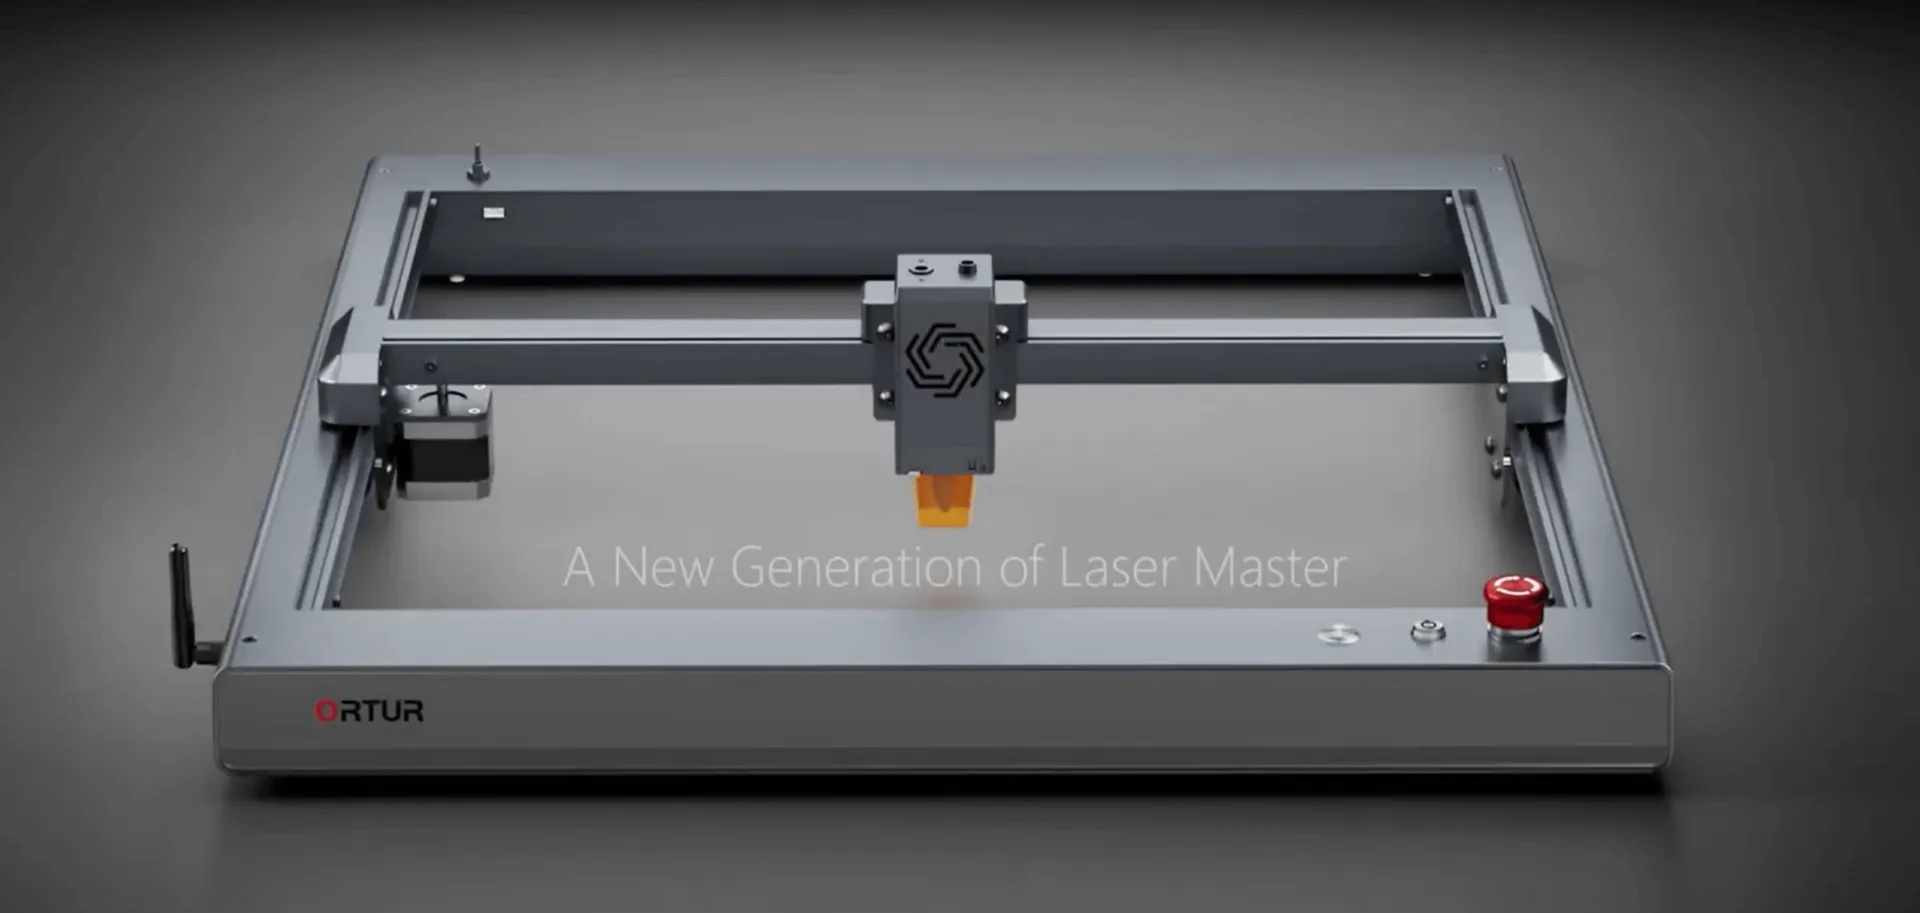 10W Ortur Laser Master 3 